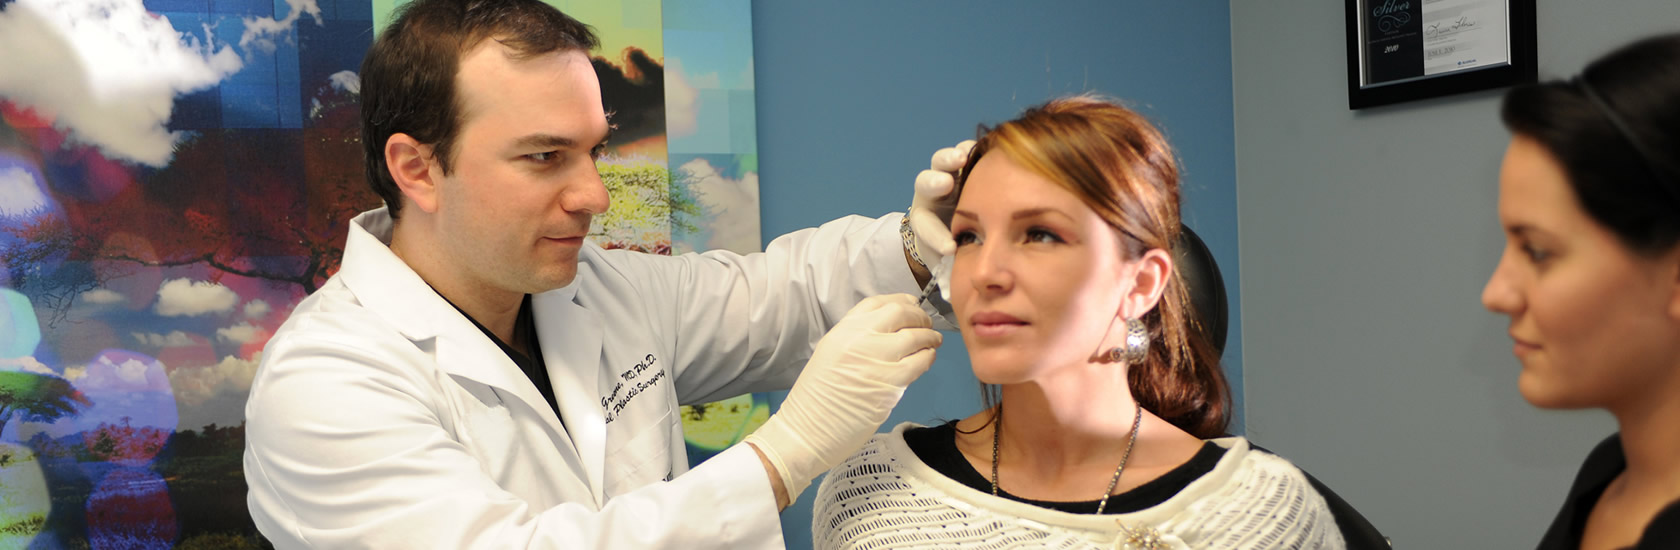 Dr. Ryan Greene facial Filler Expert